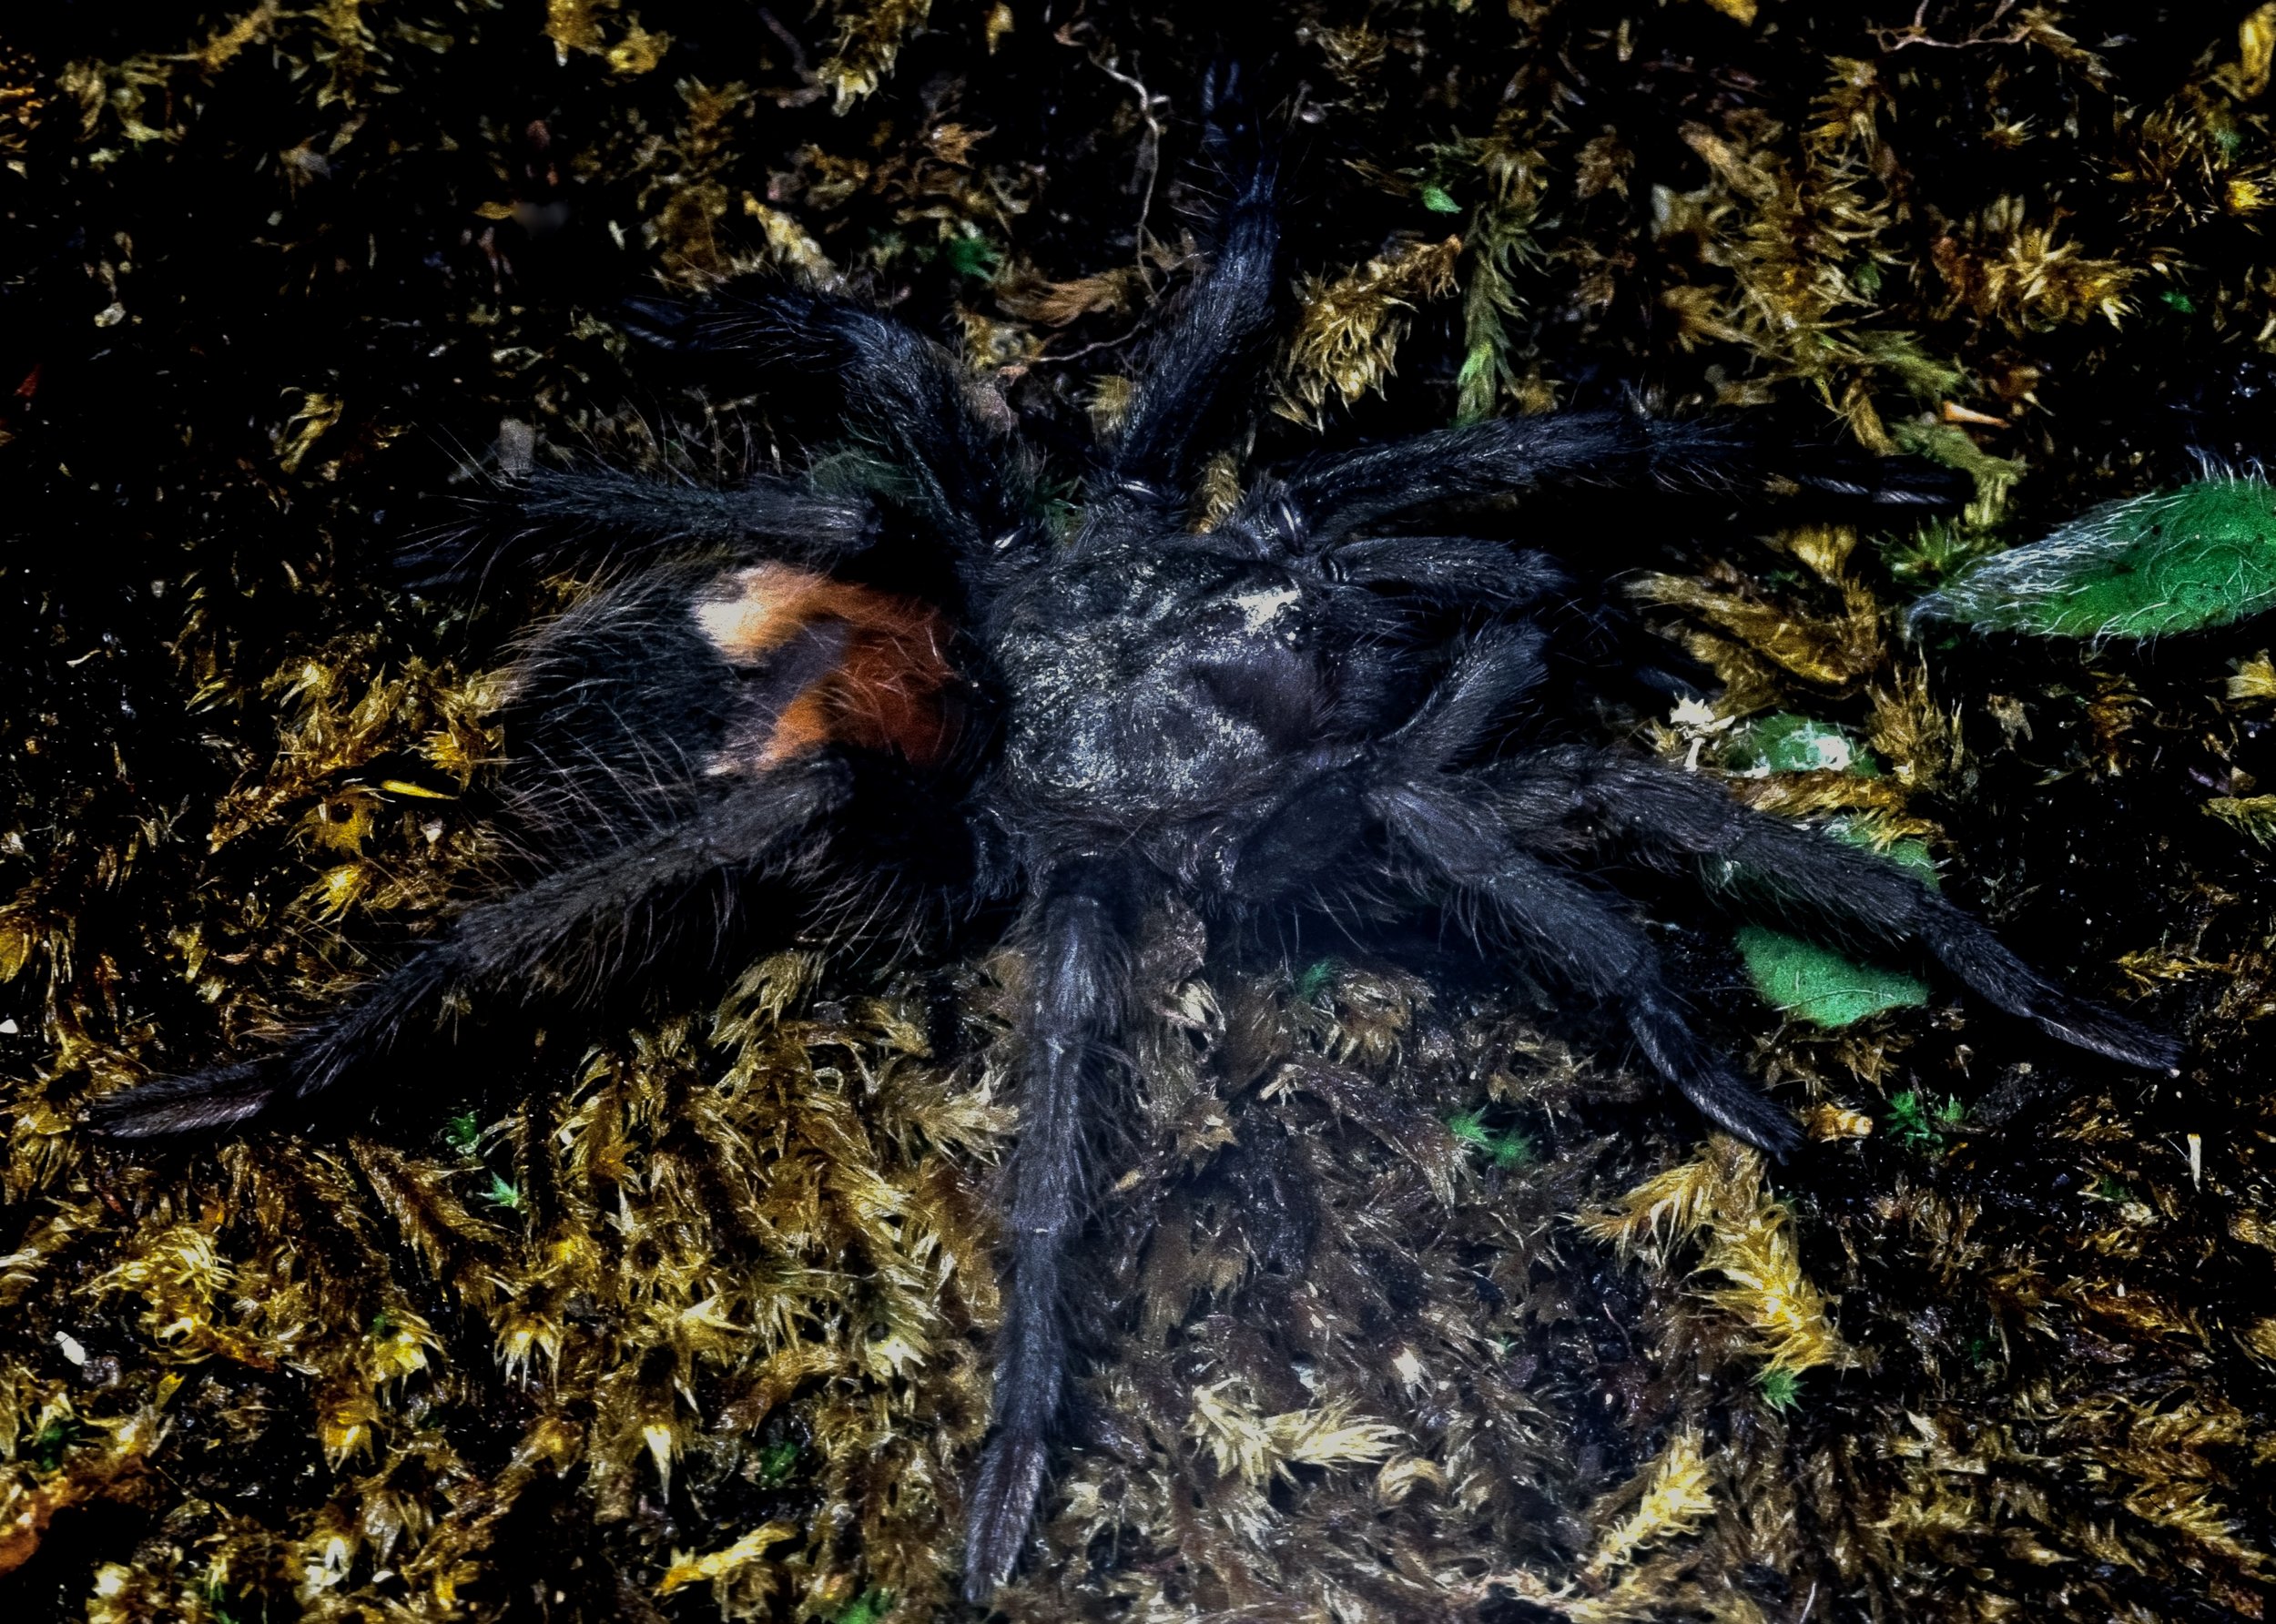   Hemirrhagus eros , El Mirador, Sierra Juarez, Oaxaca, Mexico. This interesting but poorly-known Mexican tarantula genus contains many cave-dwelling species. Image: ©W. W. Lamar 